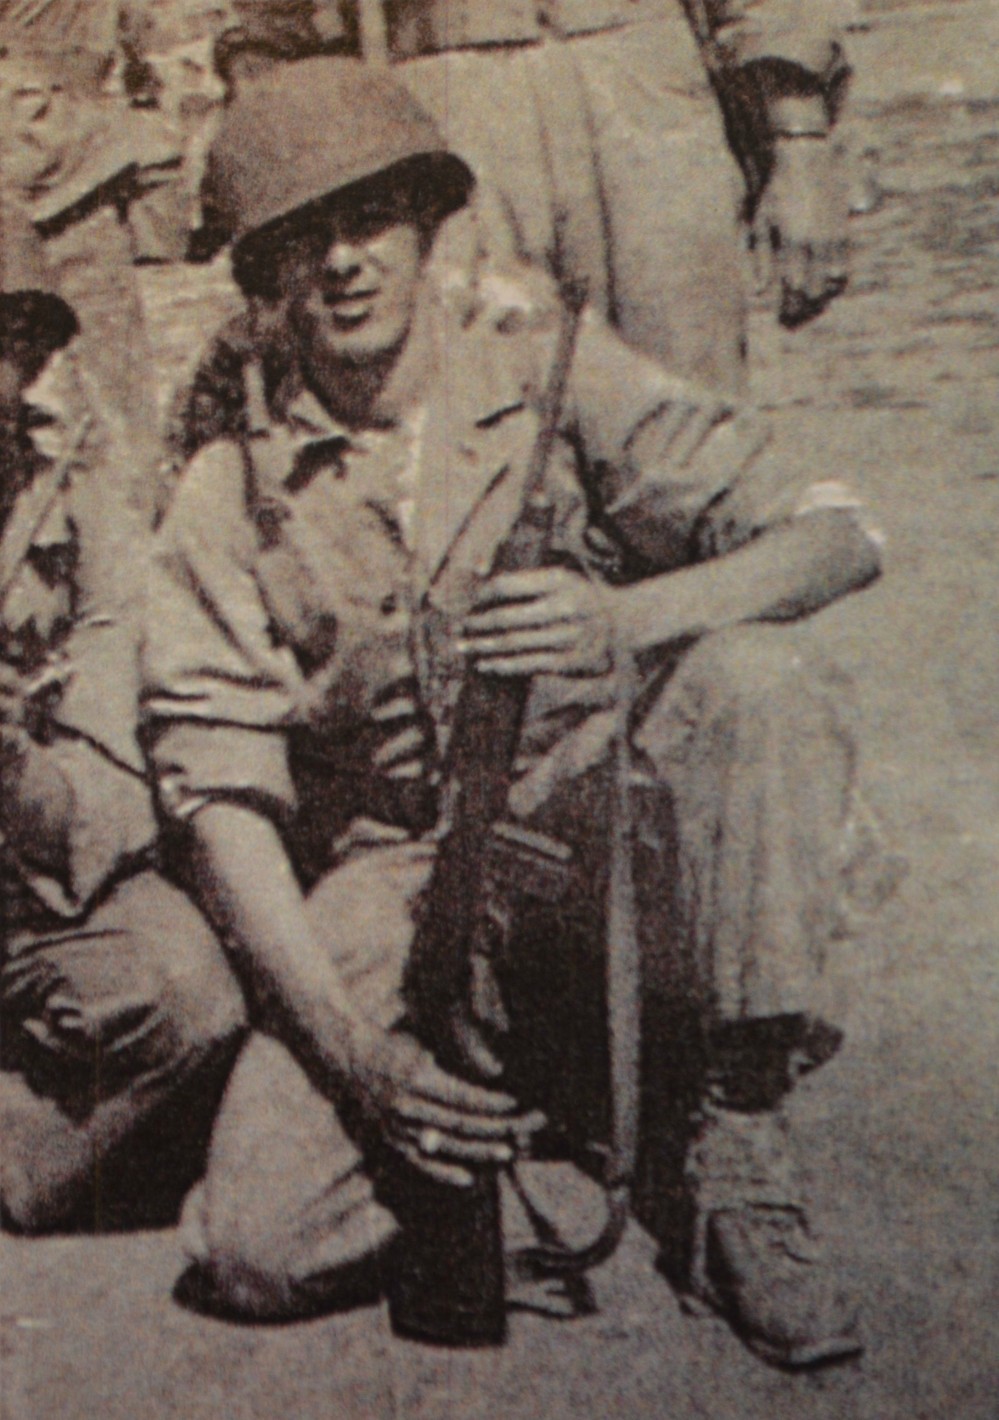 James with M1 Carbine: Camp Pendleton, CA 1944